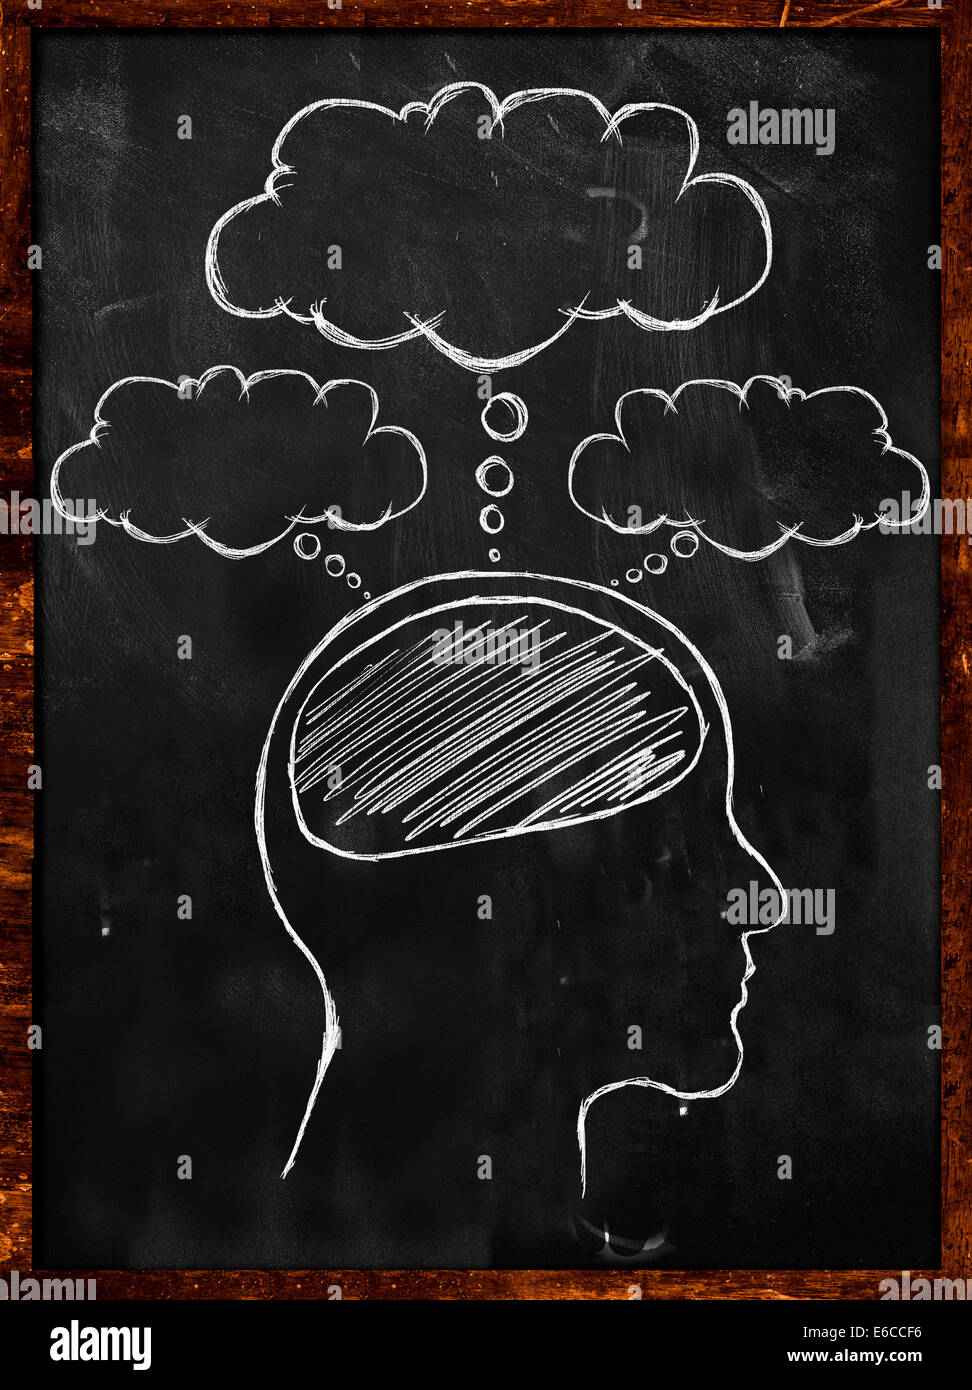 People's Minds blackboard Sketch Drawing Art Stock Photo